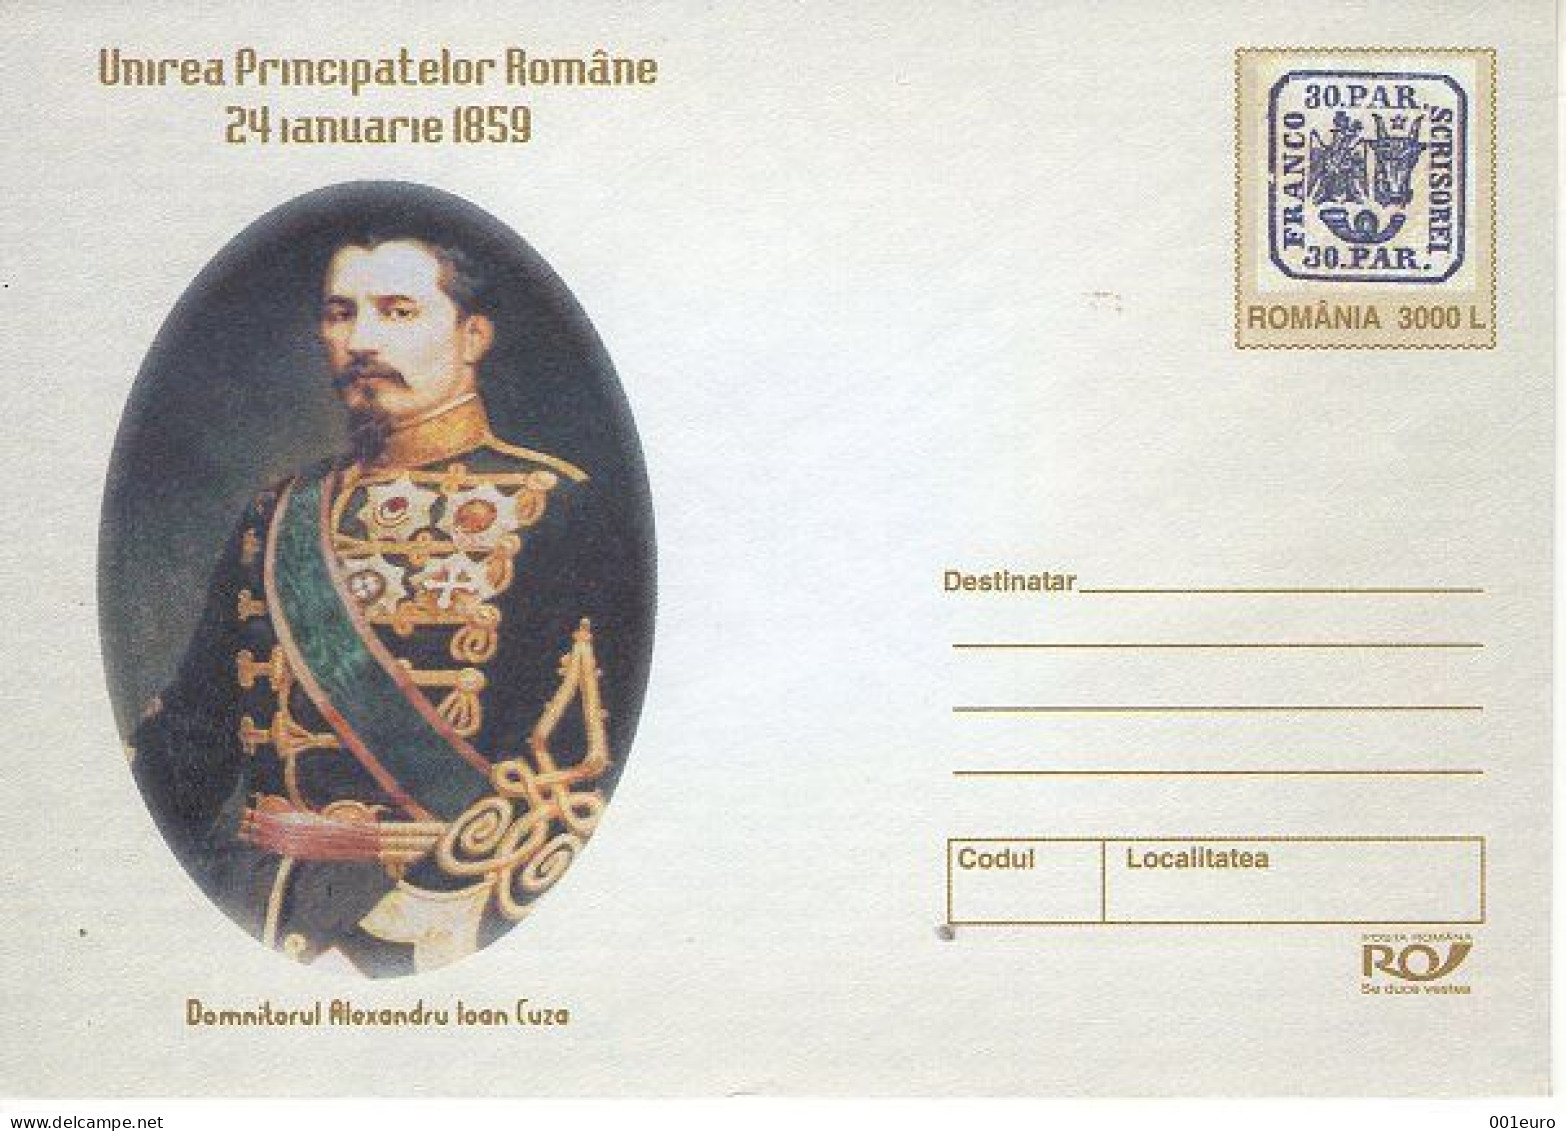 ROMANIA 026y2003: I. C. CUZA, Unused Prepaid Postal Stationery Cover - Registered Shipping! - Postal Stationery